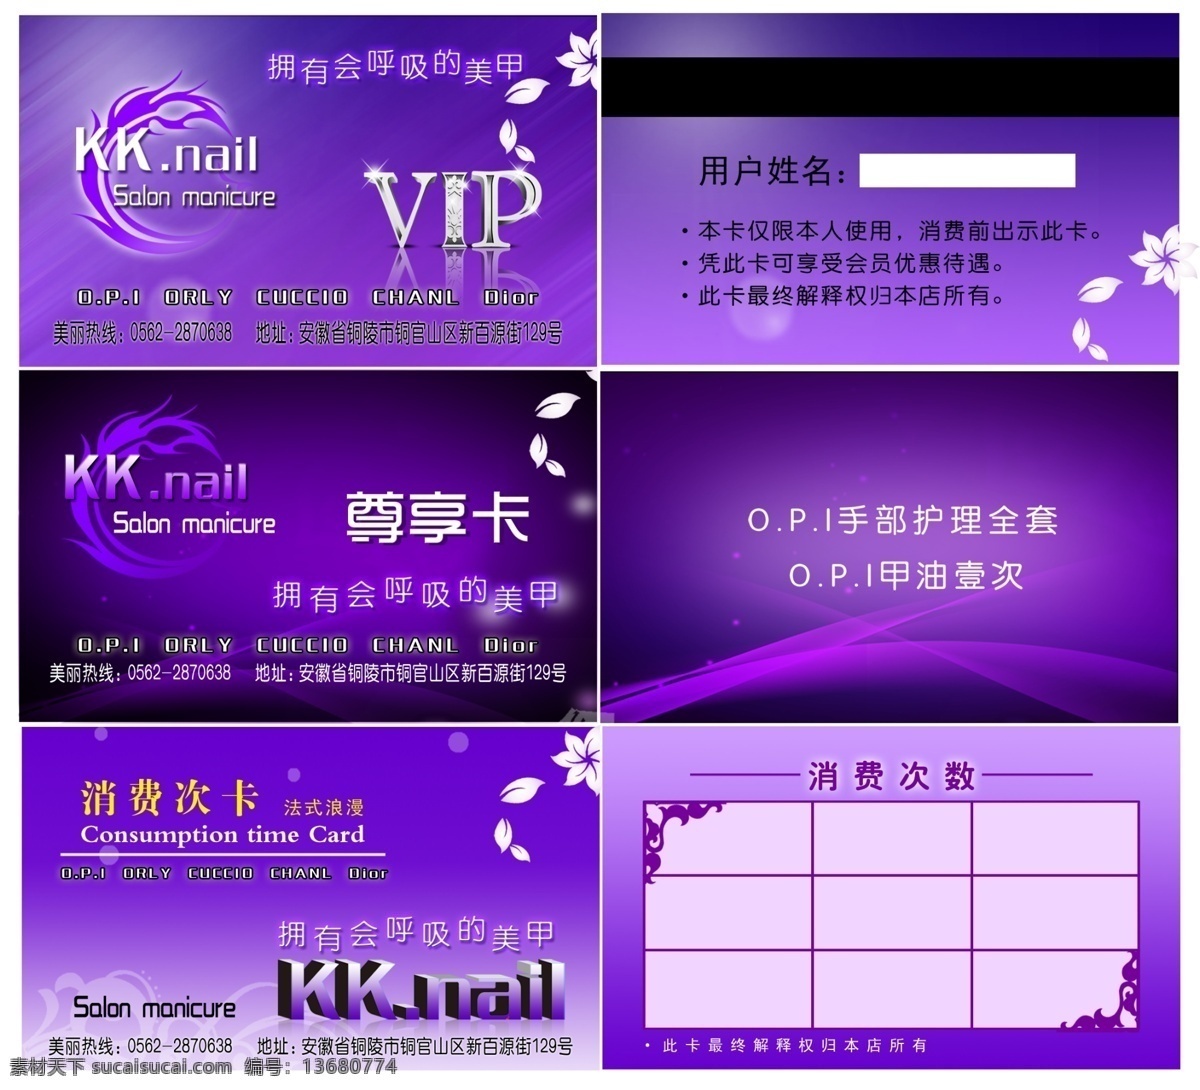 vip 广告设计模板 会员卡 卡片 美甲 梦幻紫色 名片卡片 源文件 尊享卡 消费次卡 拥有 会 呼吸 法式烂漫 紫色背景 双面卡片 名片卡 广告设计名片